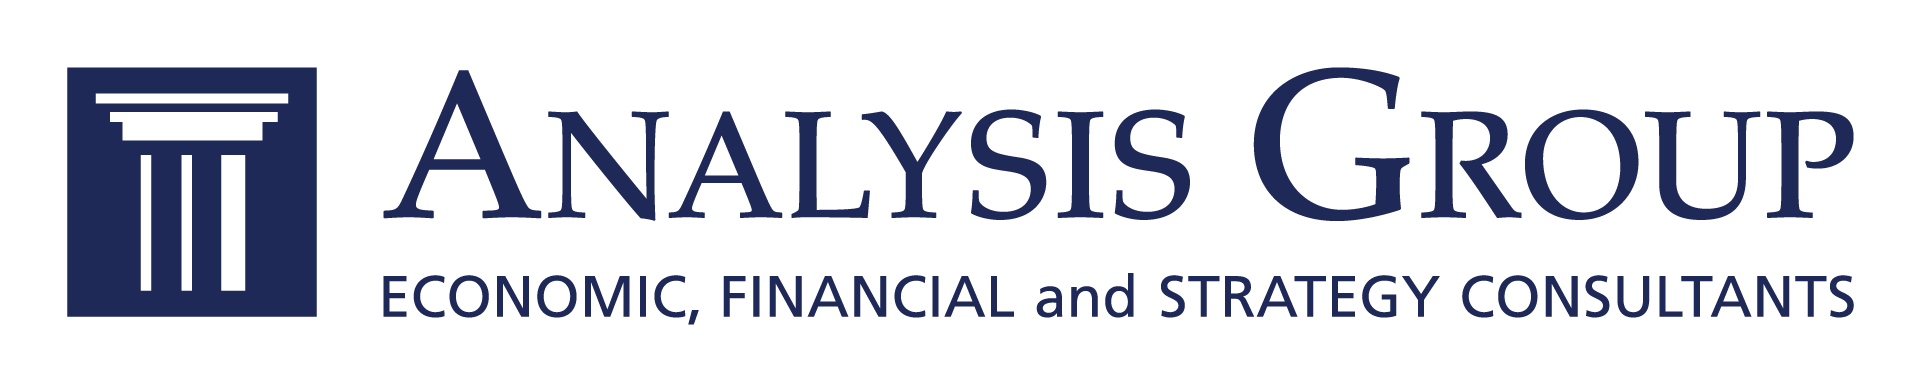 Analysis Group, Inc. Company Logo